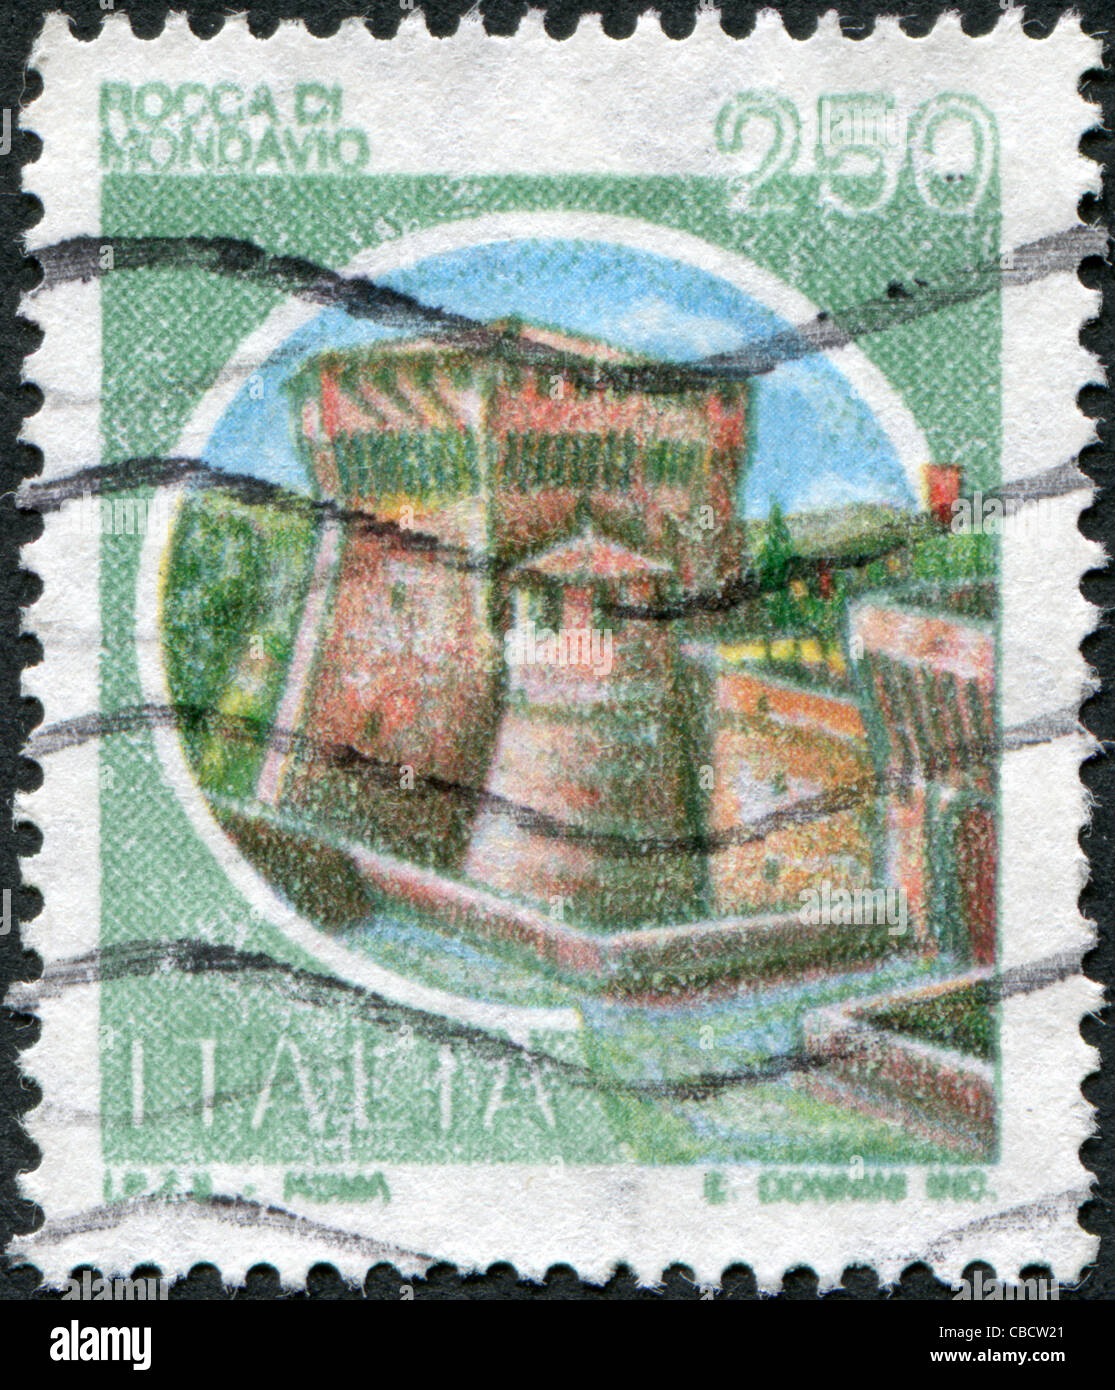 ITALY - CIRCA 1980: A stamp printed in Italy, shows the Rocca di Mondavio, circa 1980 Stock Photo